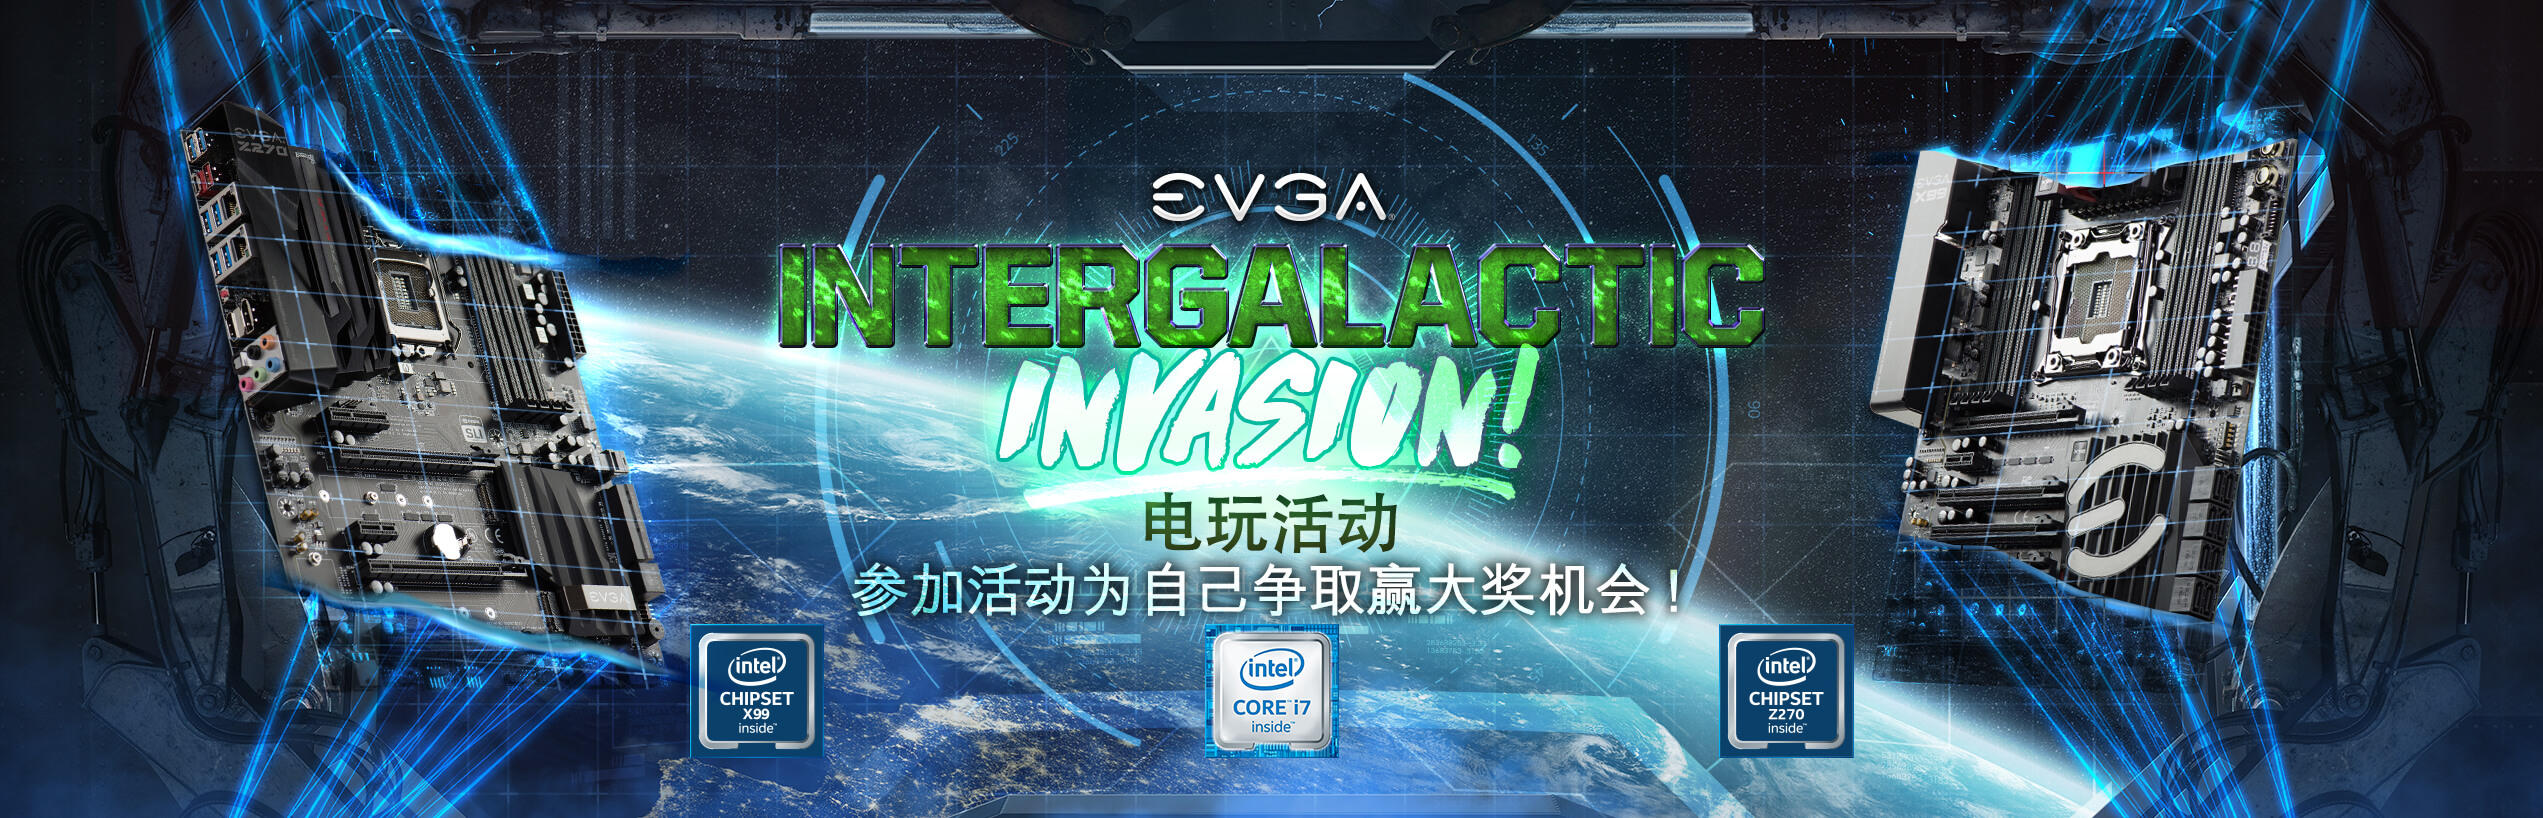 EVGA 星际入侵战游活动